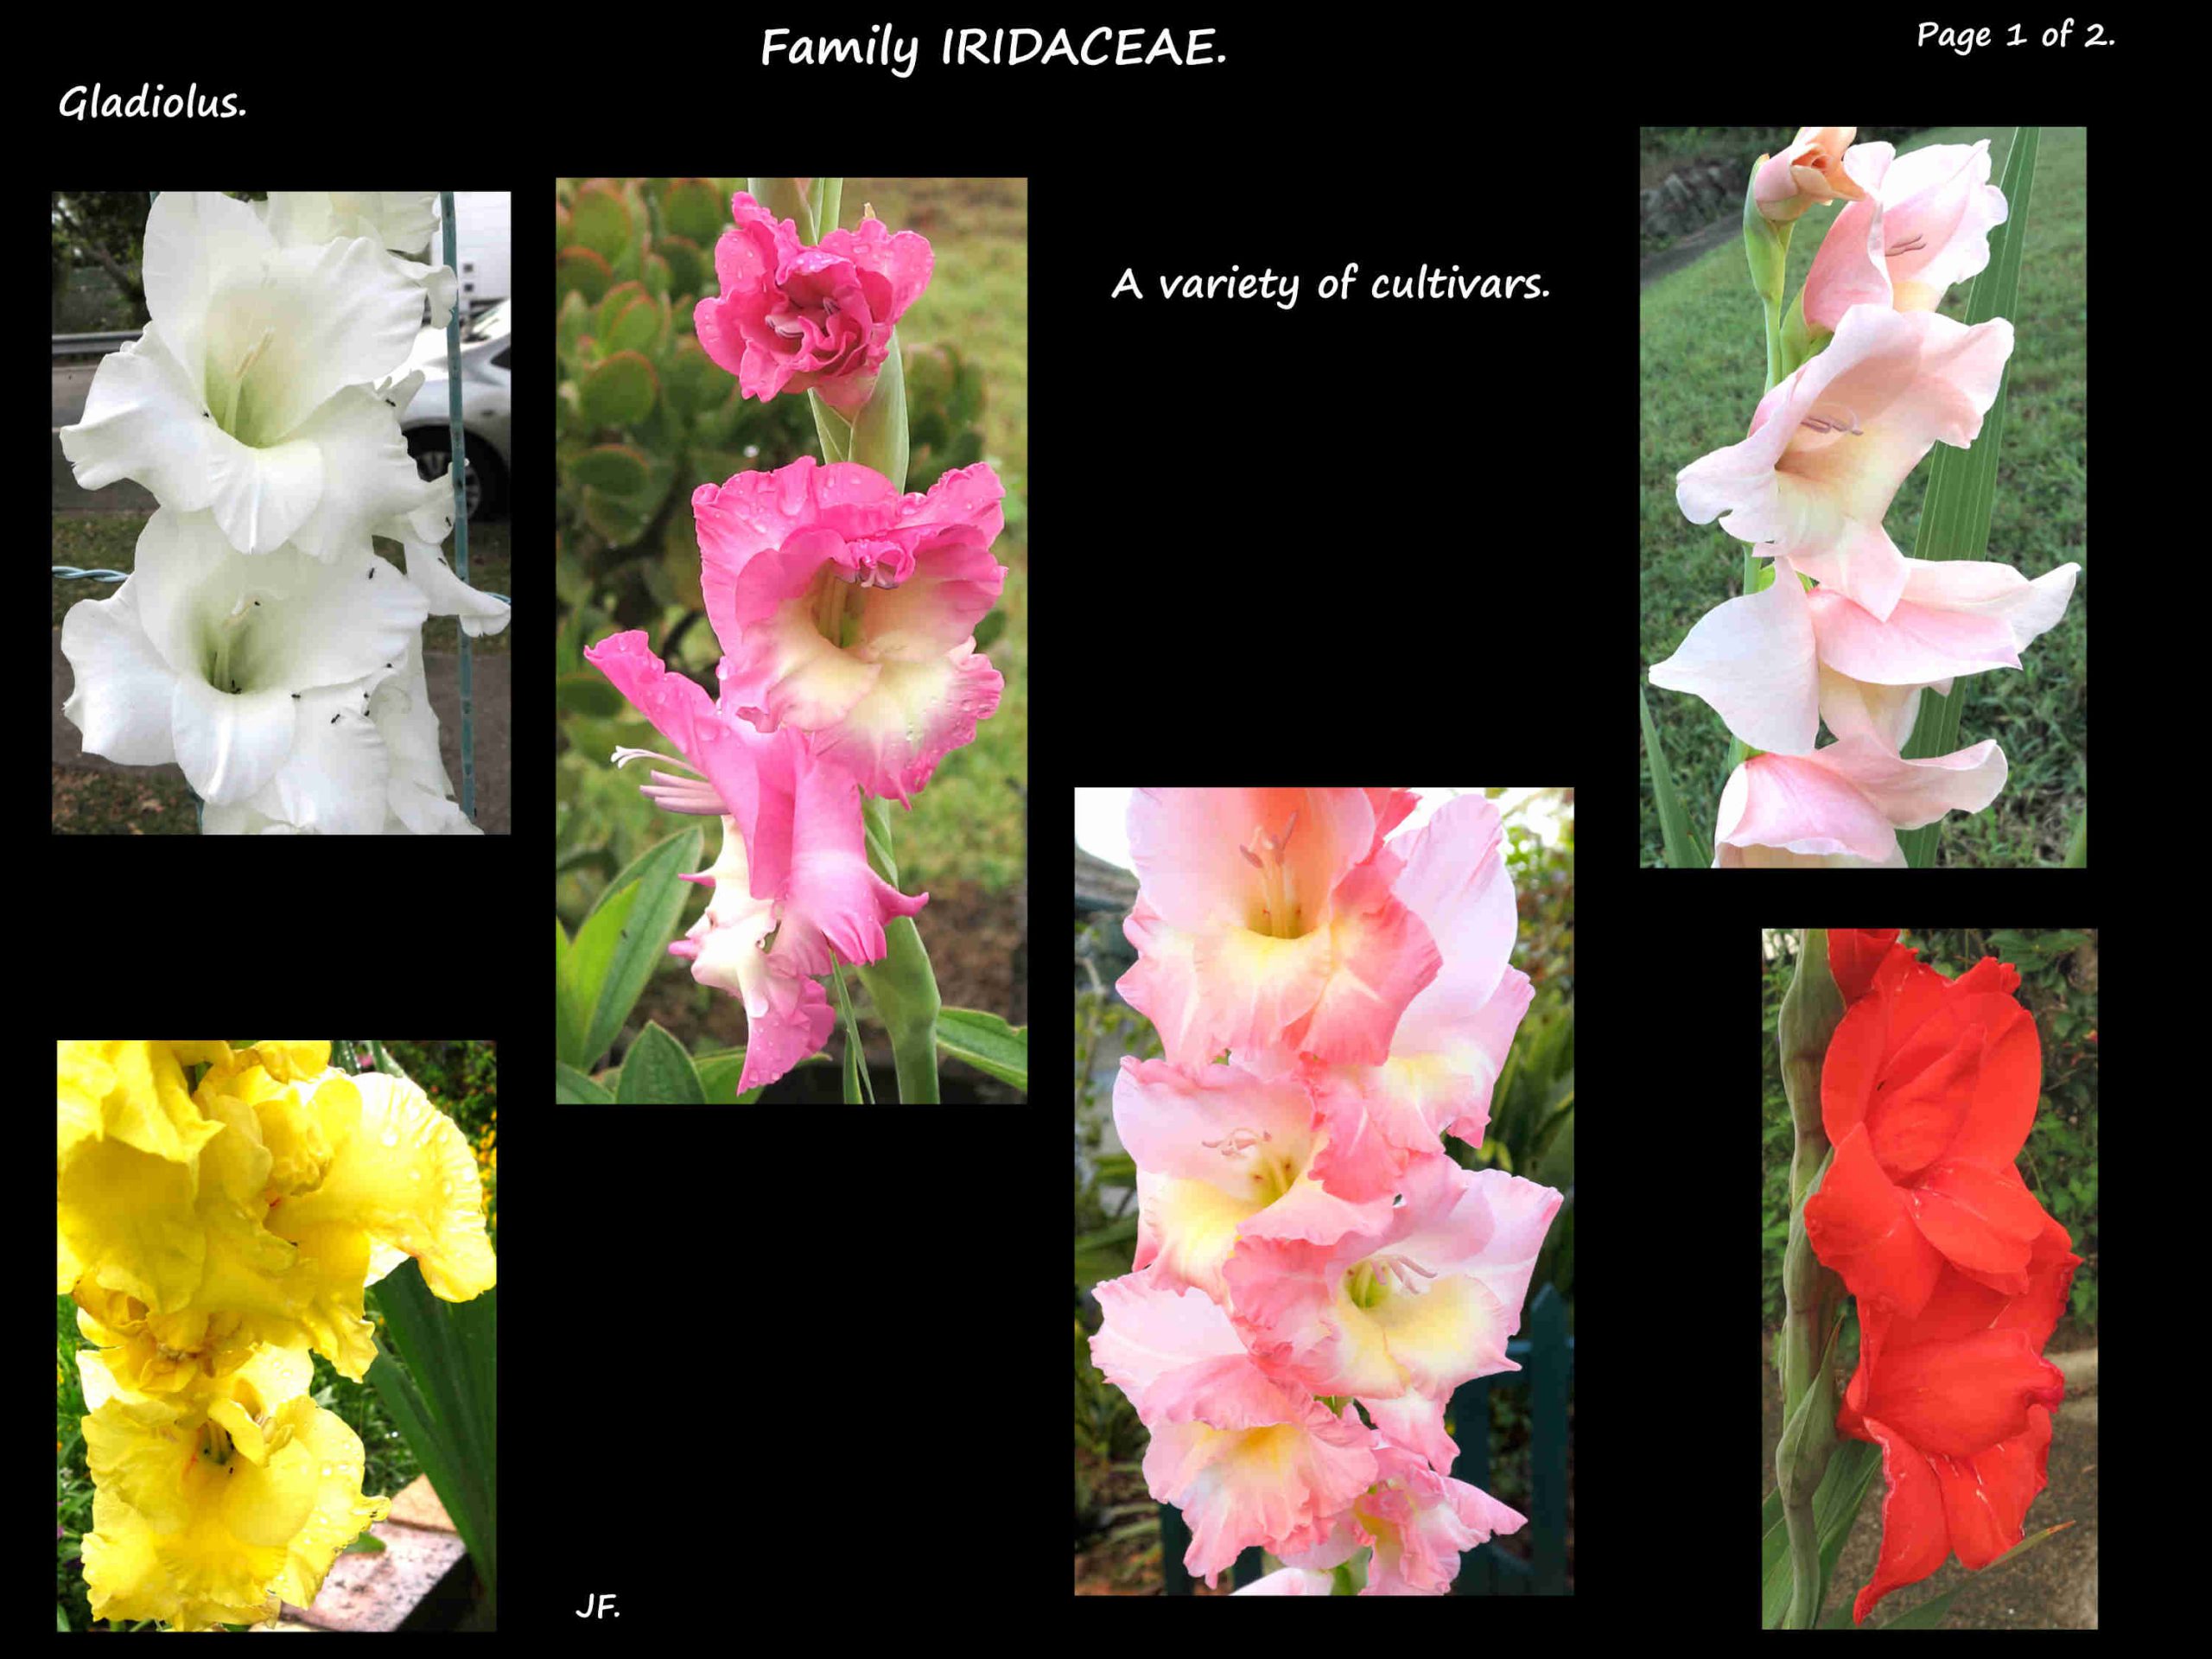 Gladiolus cultivars 1